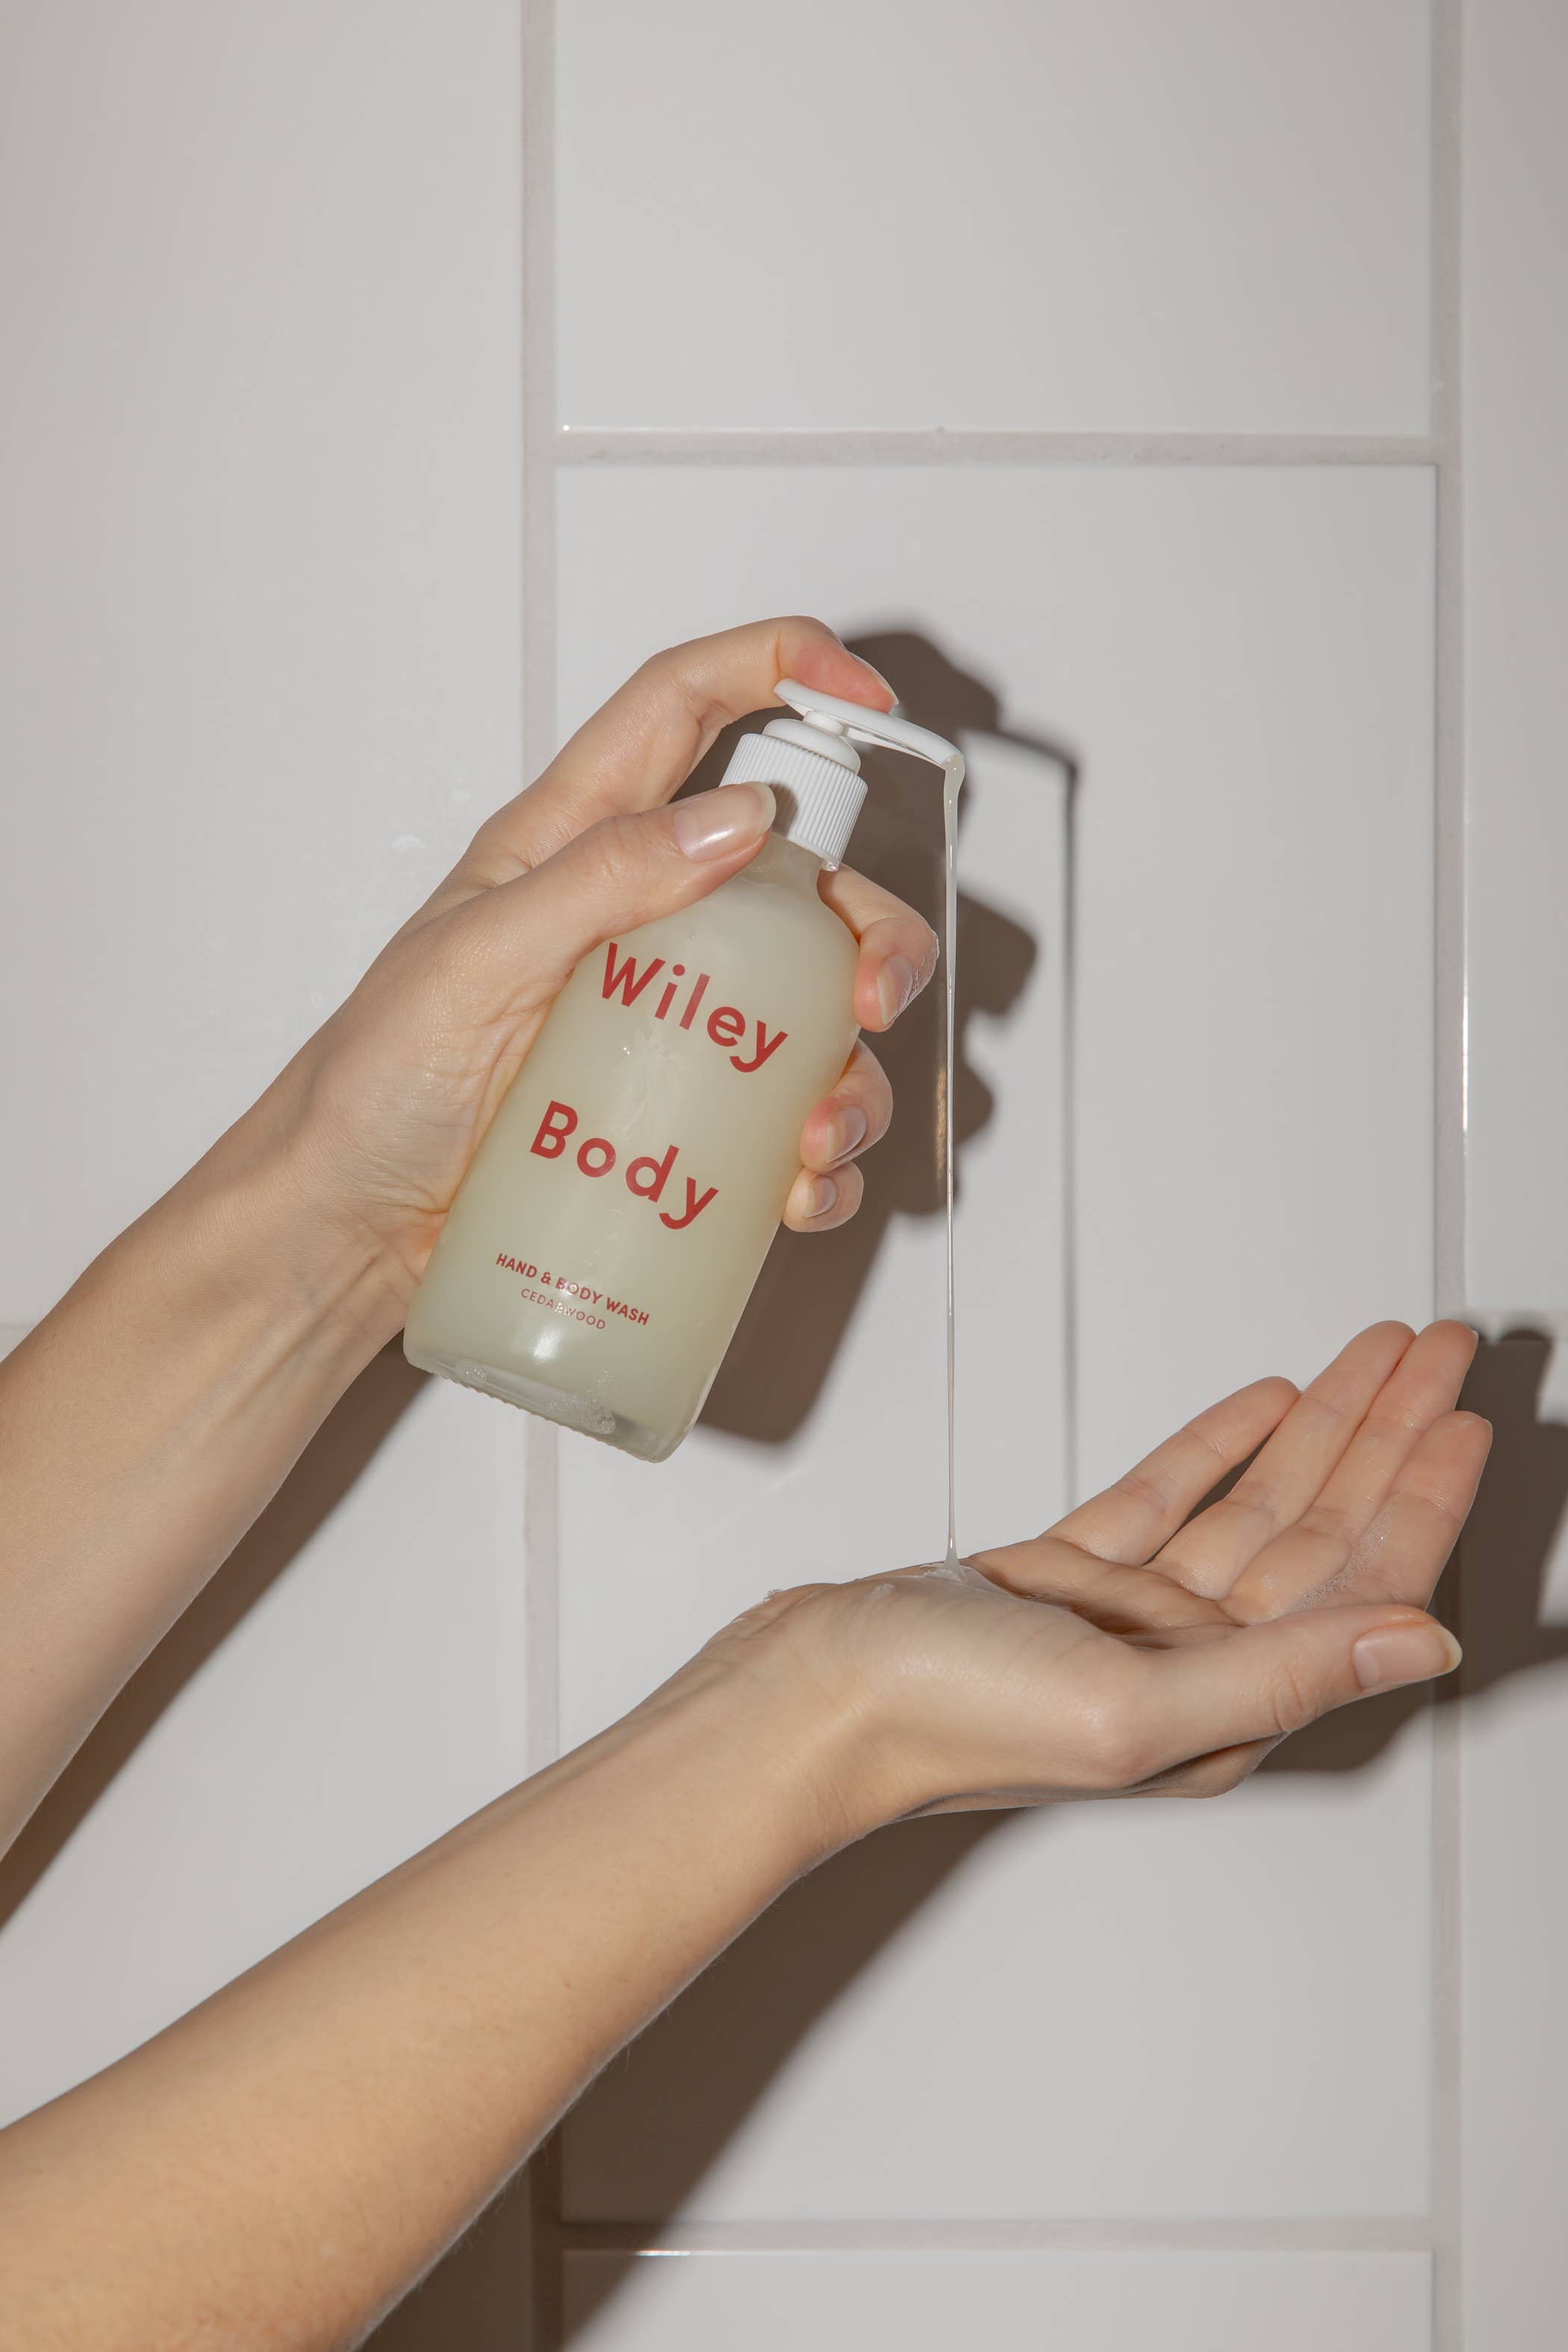 Wiley Body - Hand & Body Wash